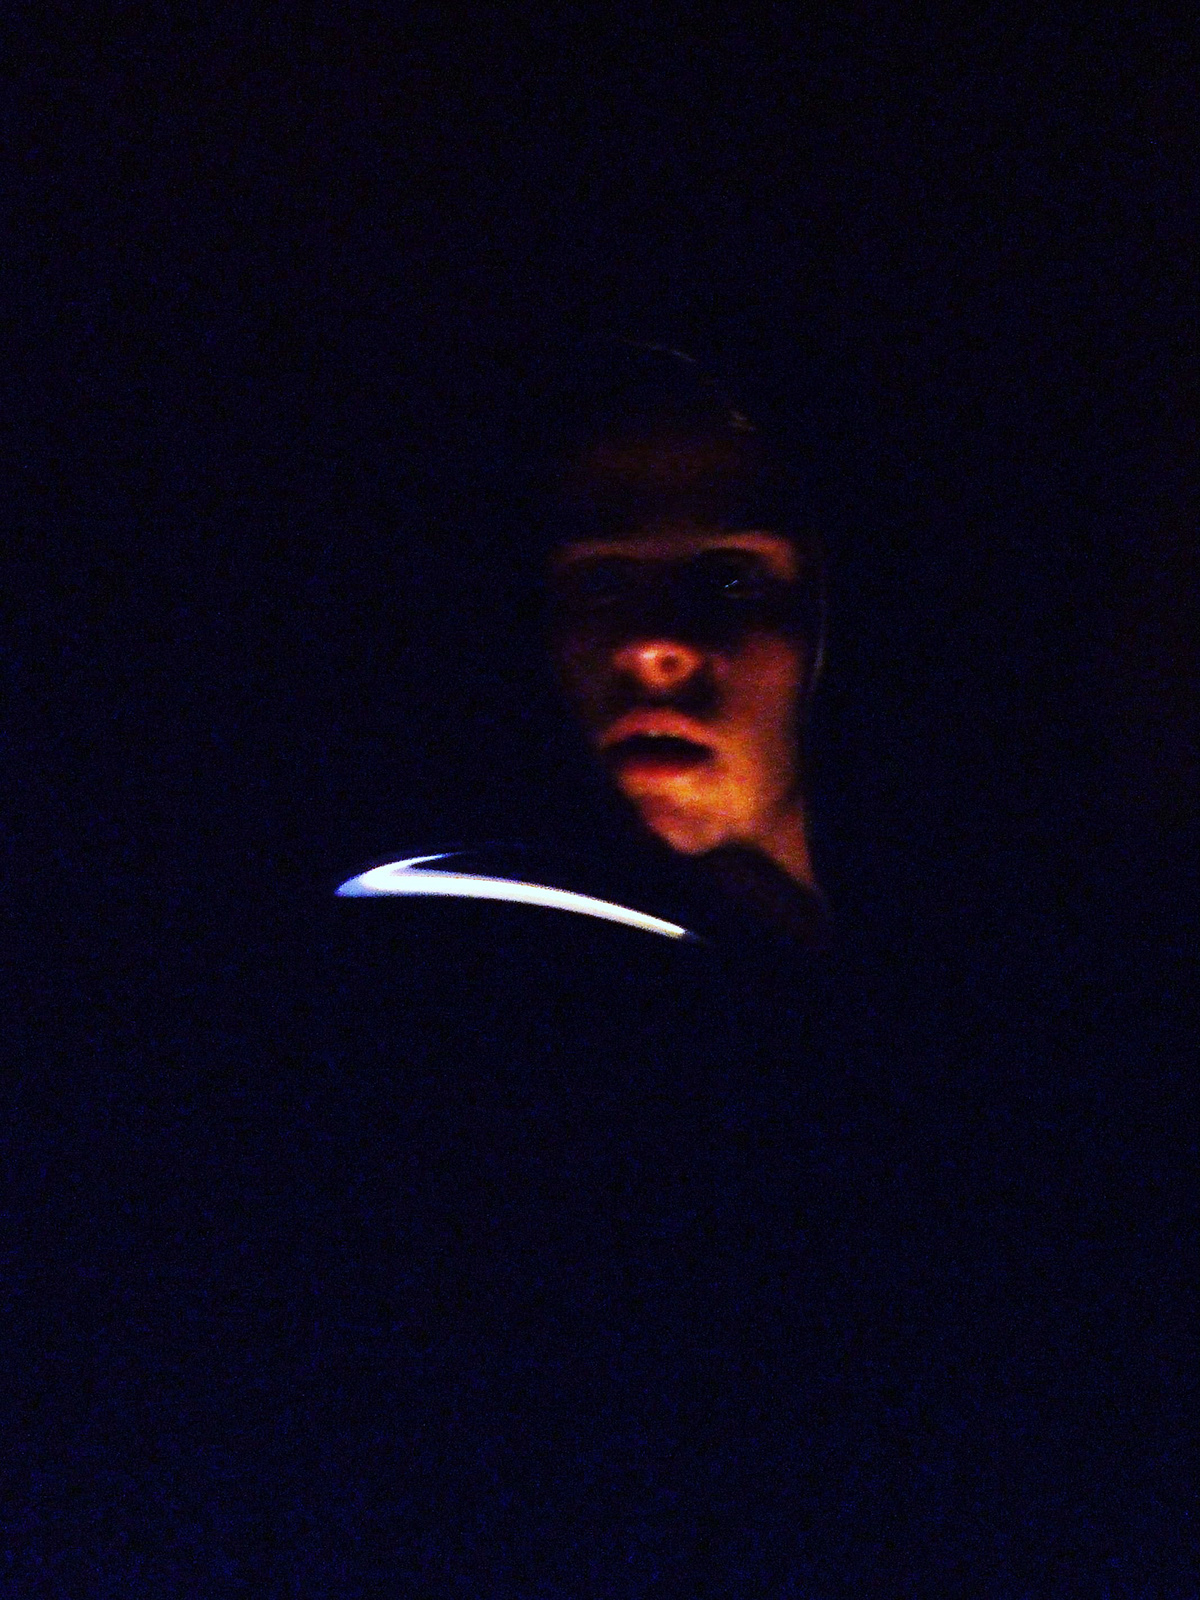 hidden identity darkness dark black light glow warmth question figure portrait stereotype experimental photography experimental concept